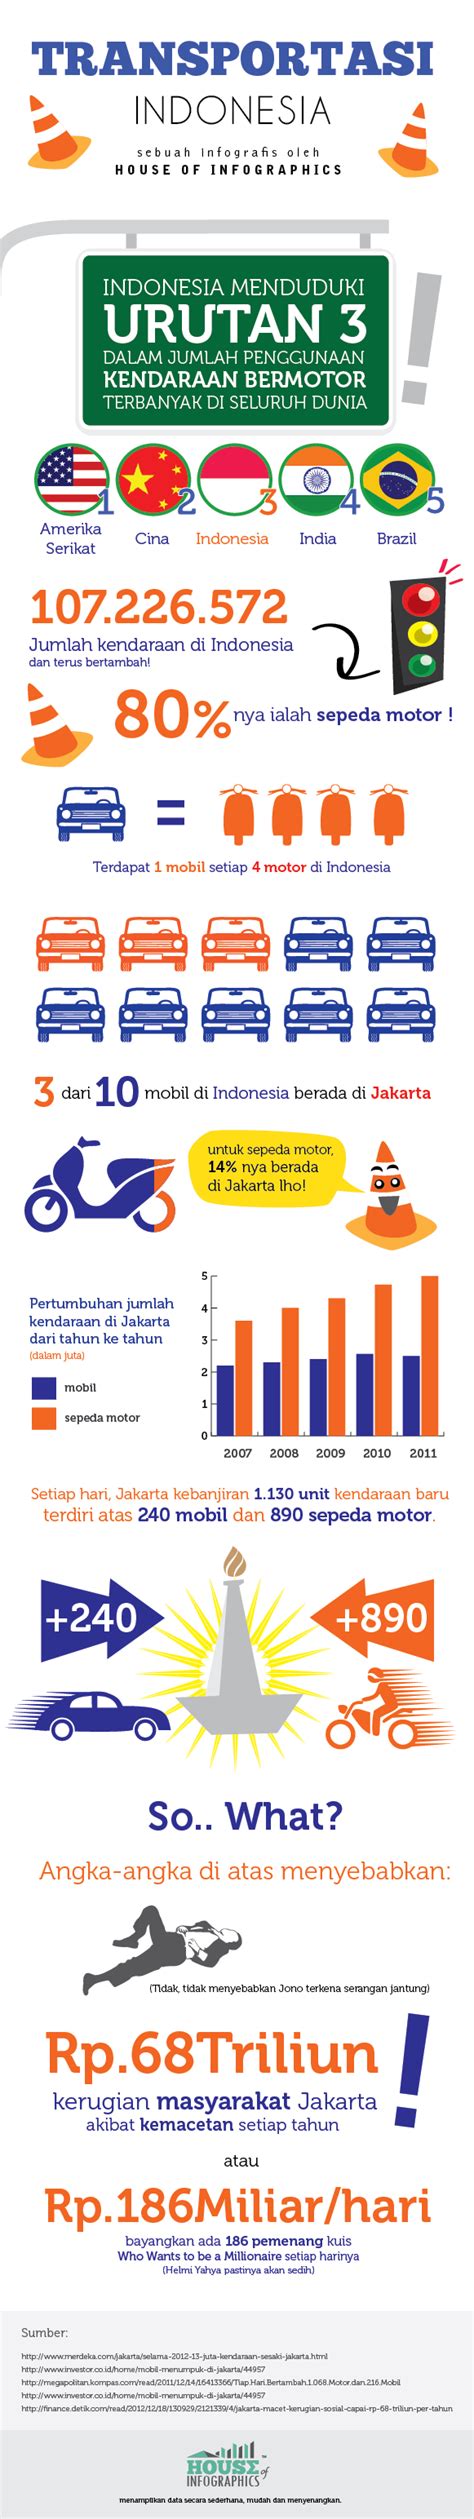 Infografis Transportasi Indonesia House Of Infographics My XXX Hot Girl